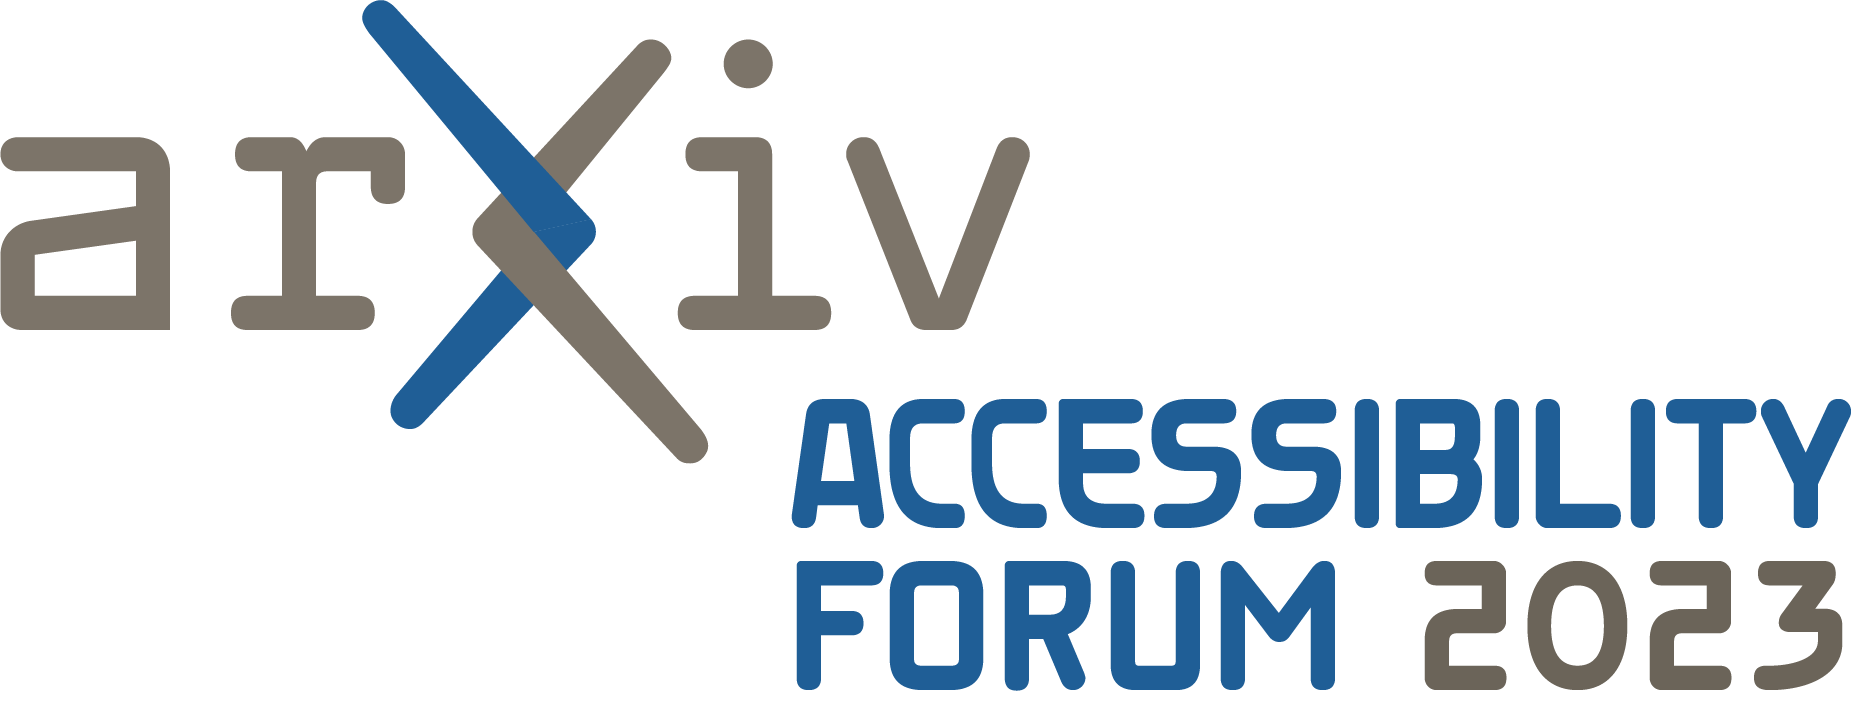 logo for the arXiv forum